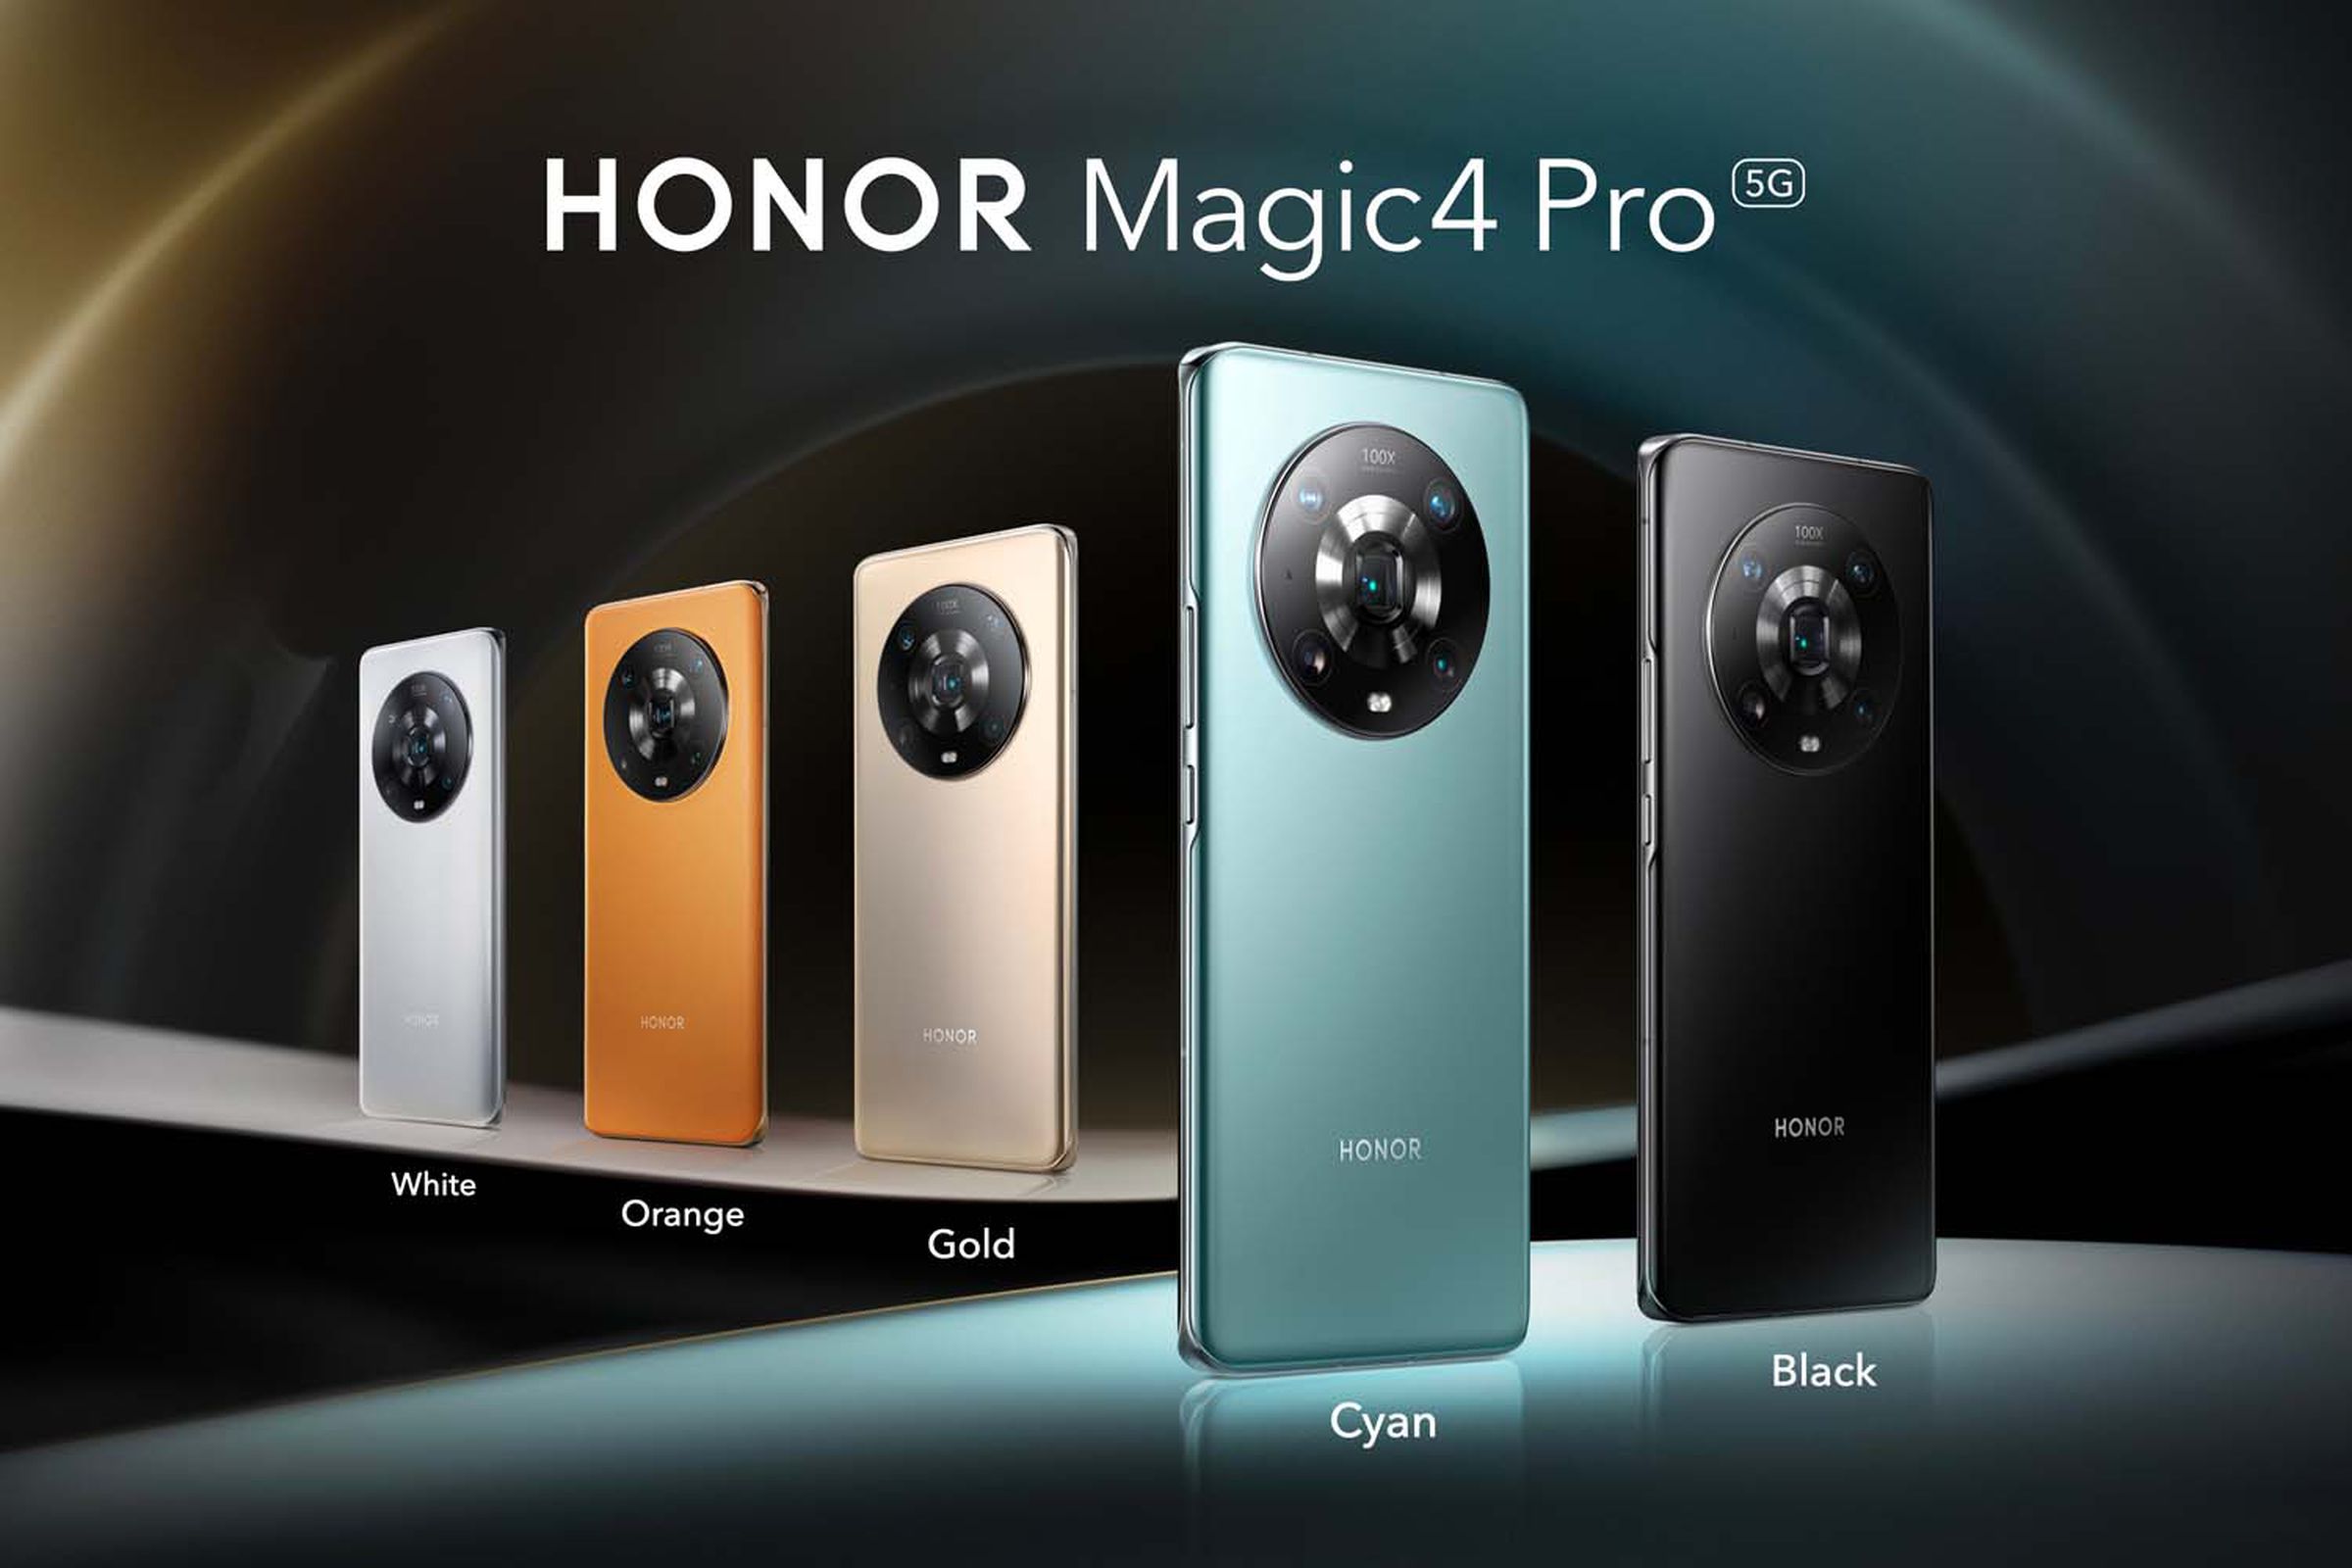 The Honor Magic 4 Pro.